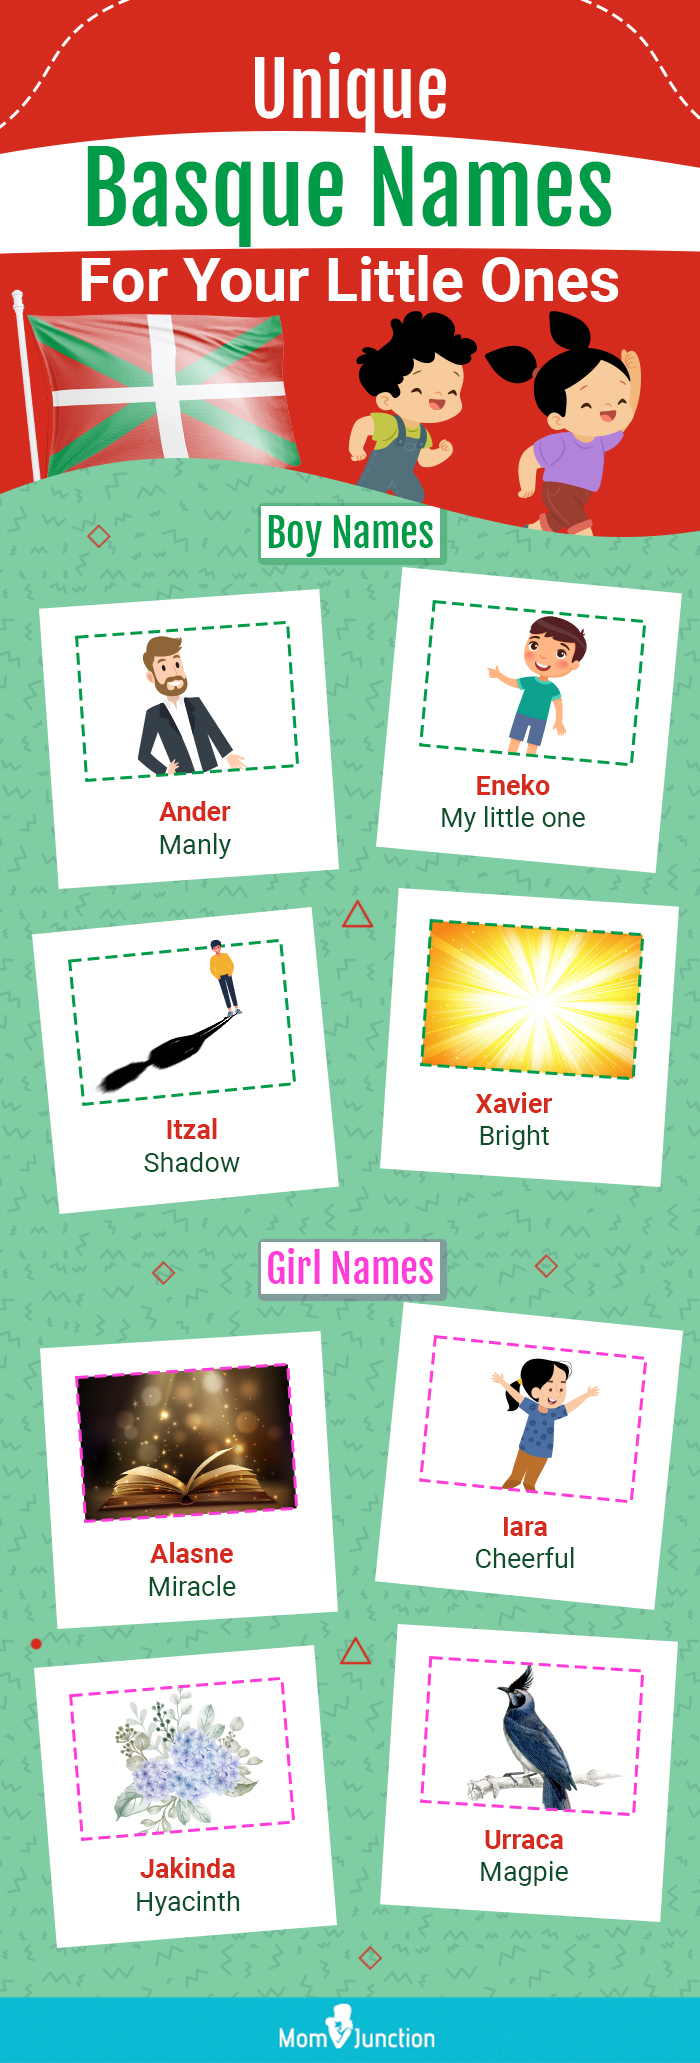 unique basque names for your little ones (infographic)